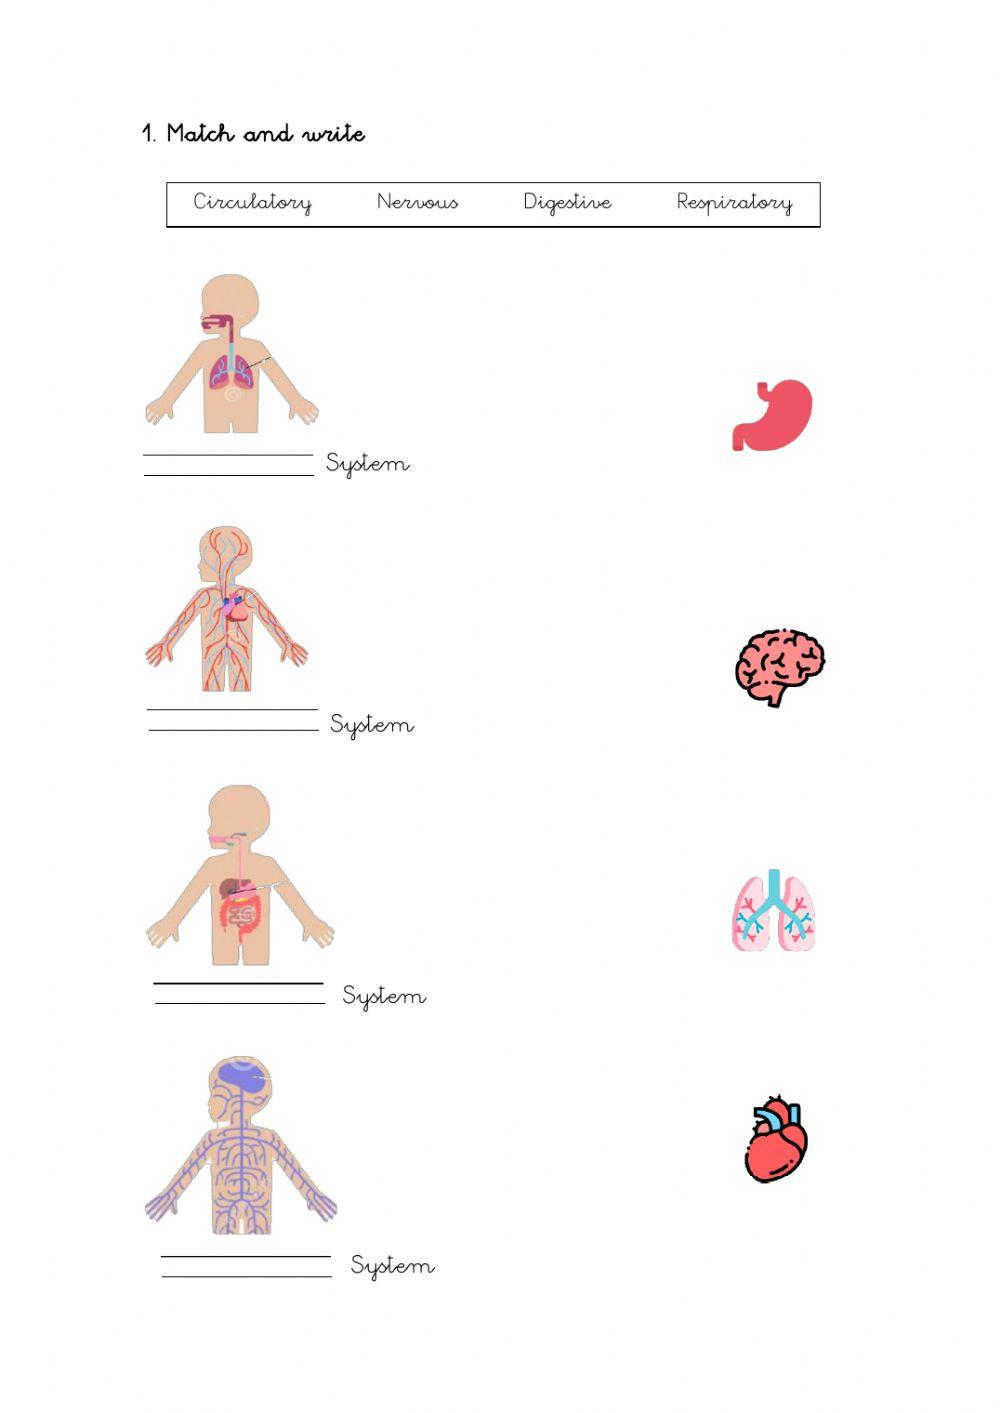 Body parts and senses